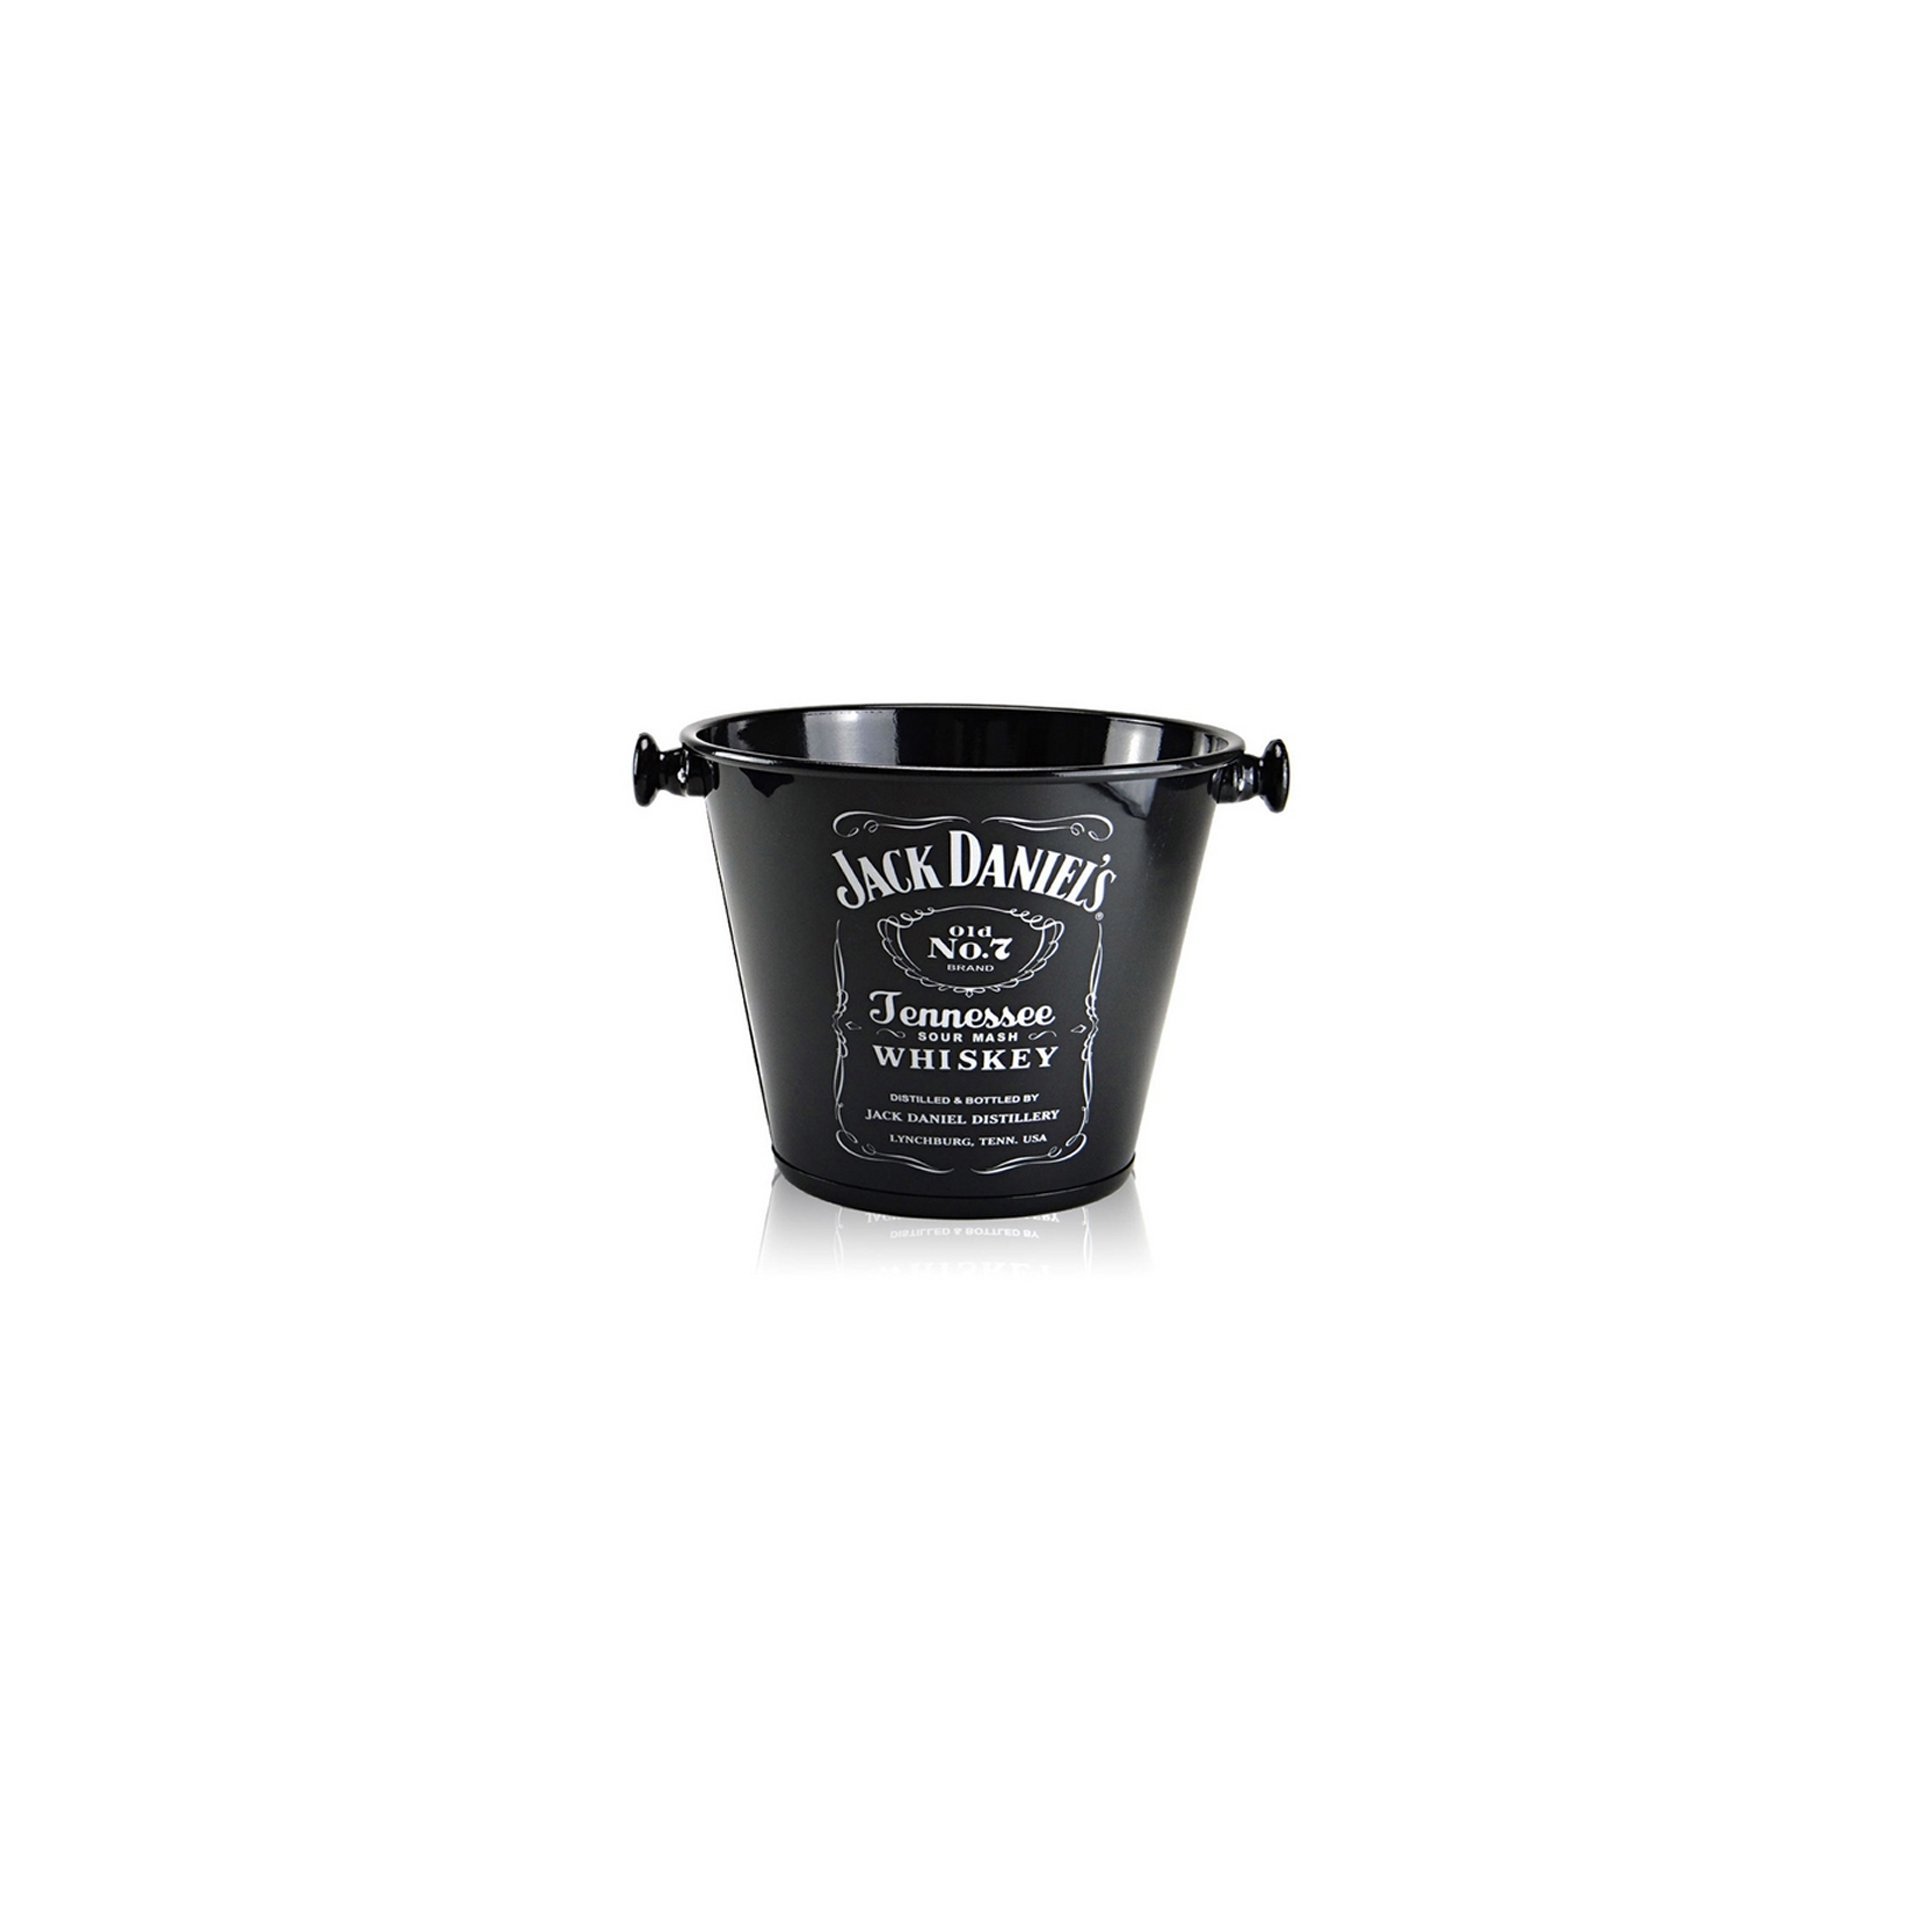 Luminoso Decorativo Redondo Jack Daniels + Balde De Alumínio Para Gelo Jack Daniels